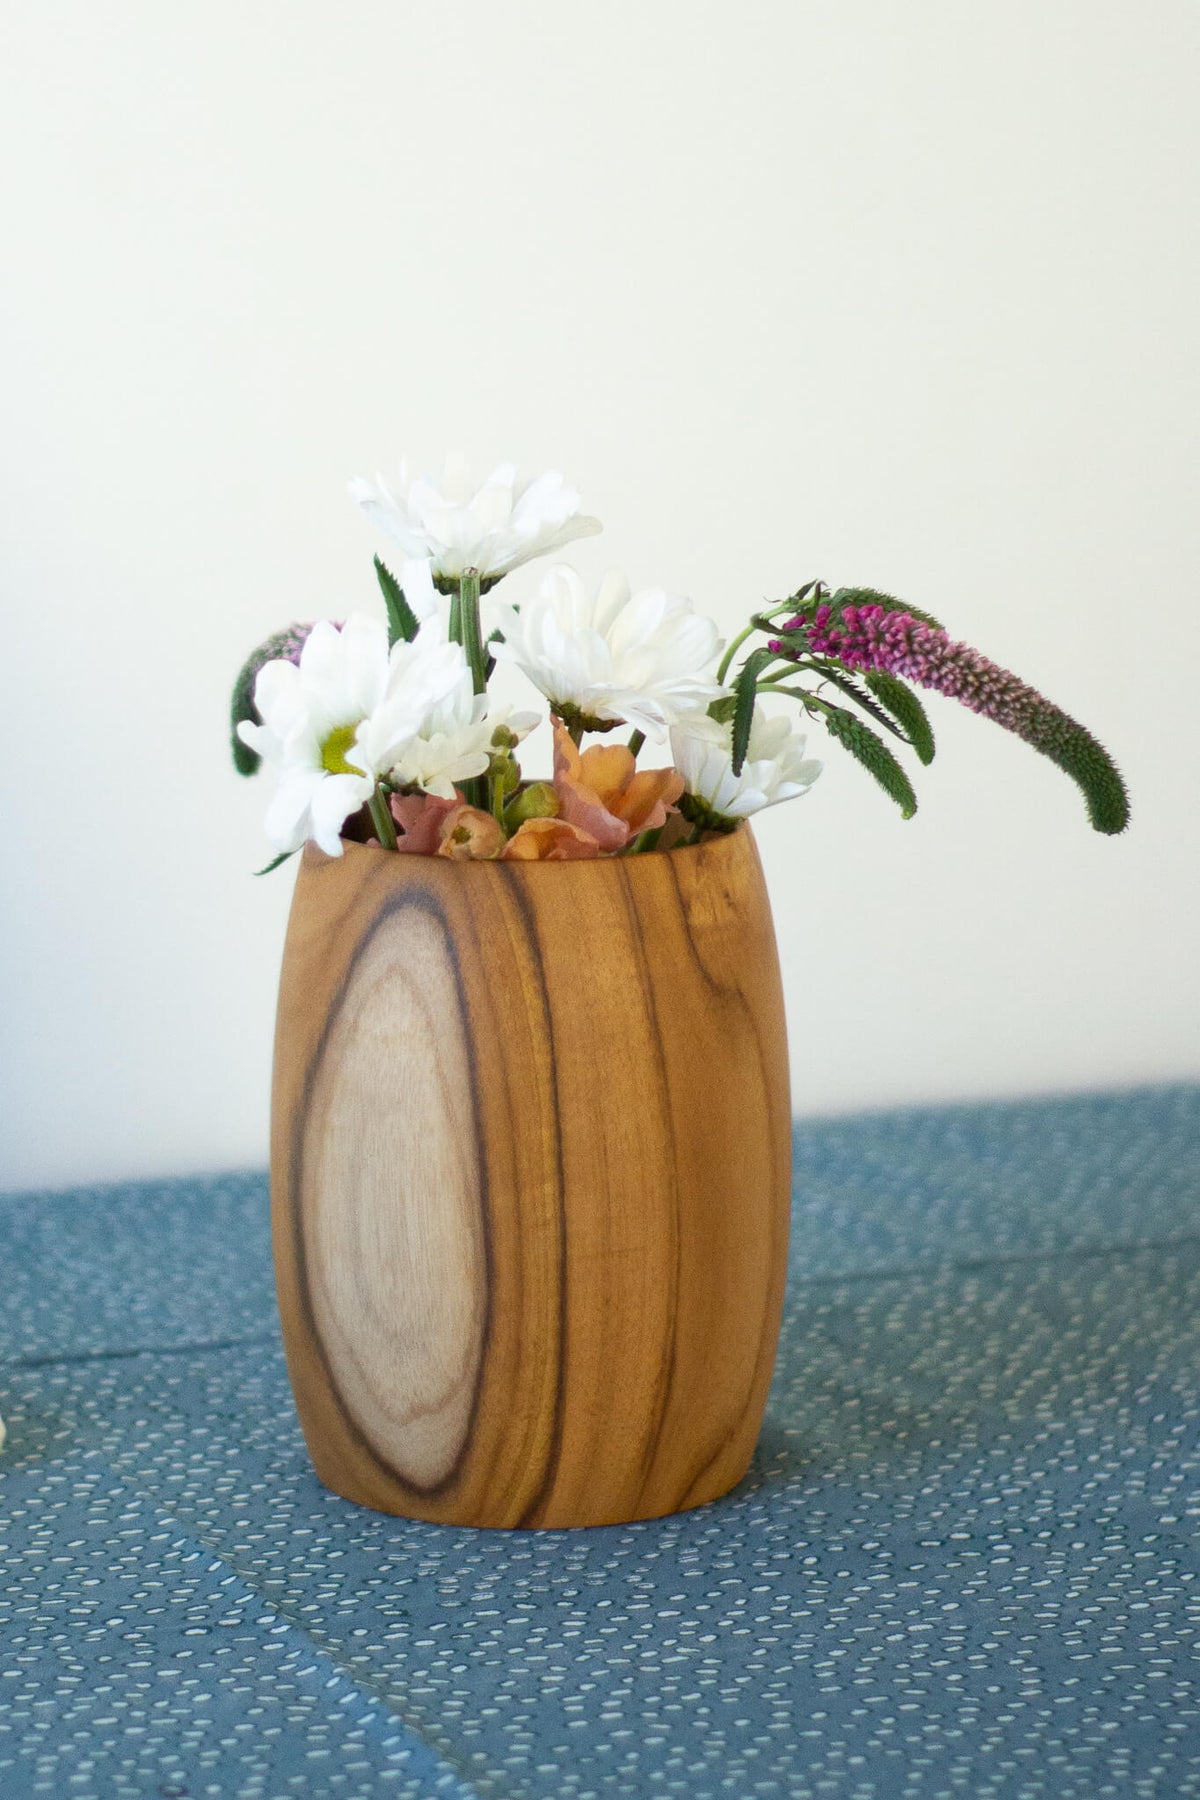 Itza Wood Small Wood Vase